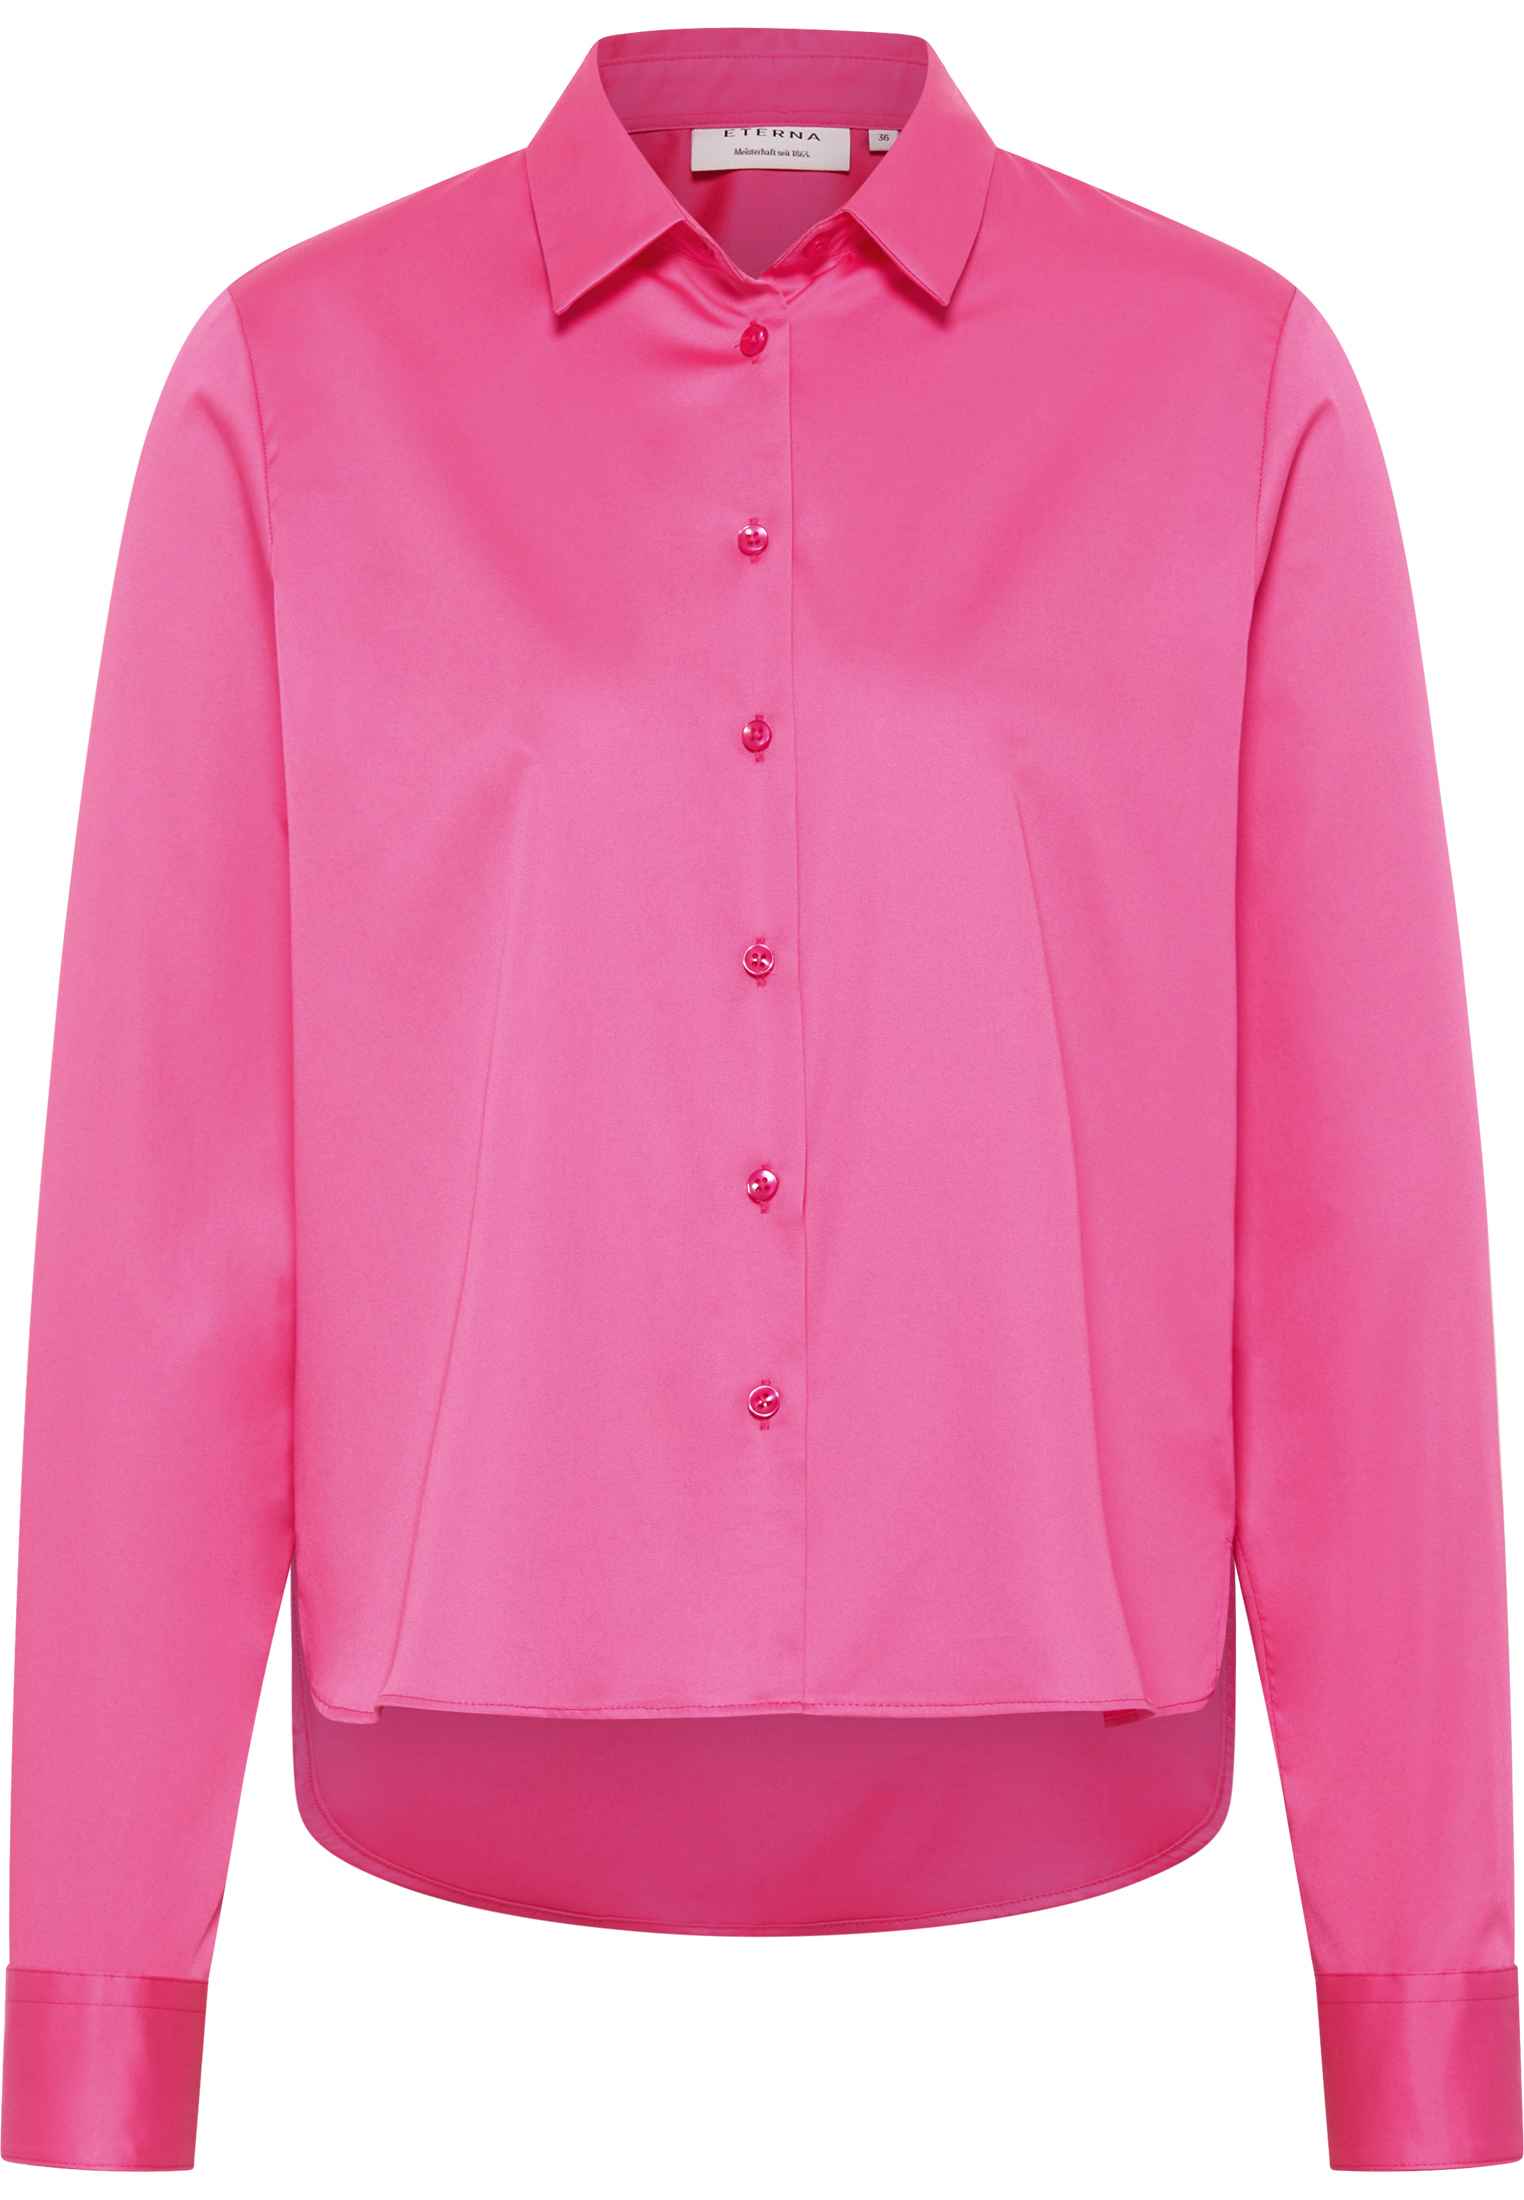 Satin Shirt Blouse | plain 2BL04469-15-21-52-1/1 | pink 52 pink | sleeve | in long